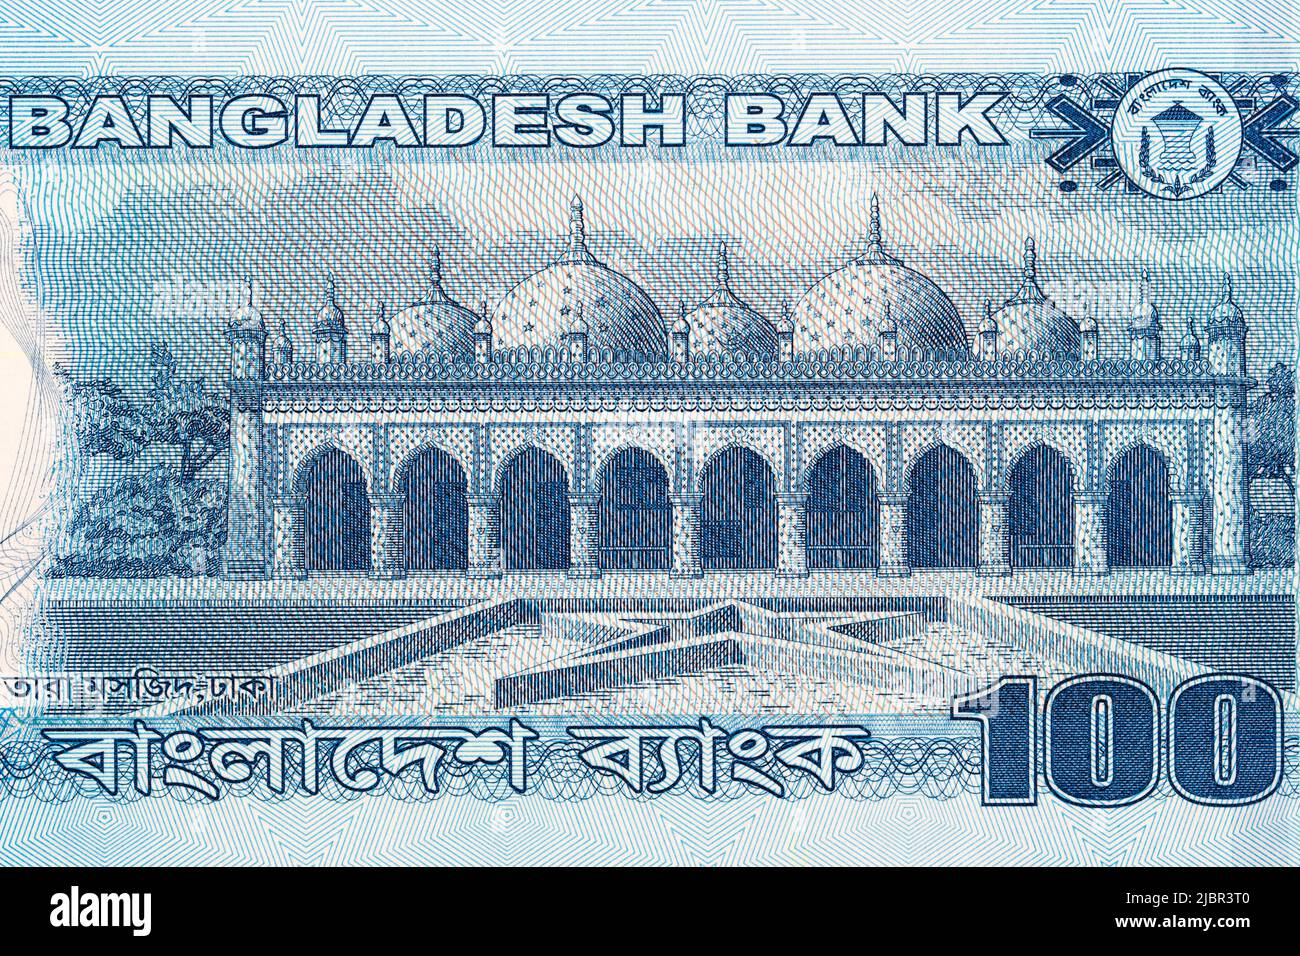 Moschea delle stelle - Tara Masjid da soldi del Bangladesh - Taka Foto Stock